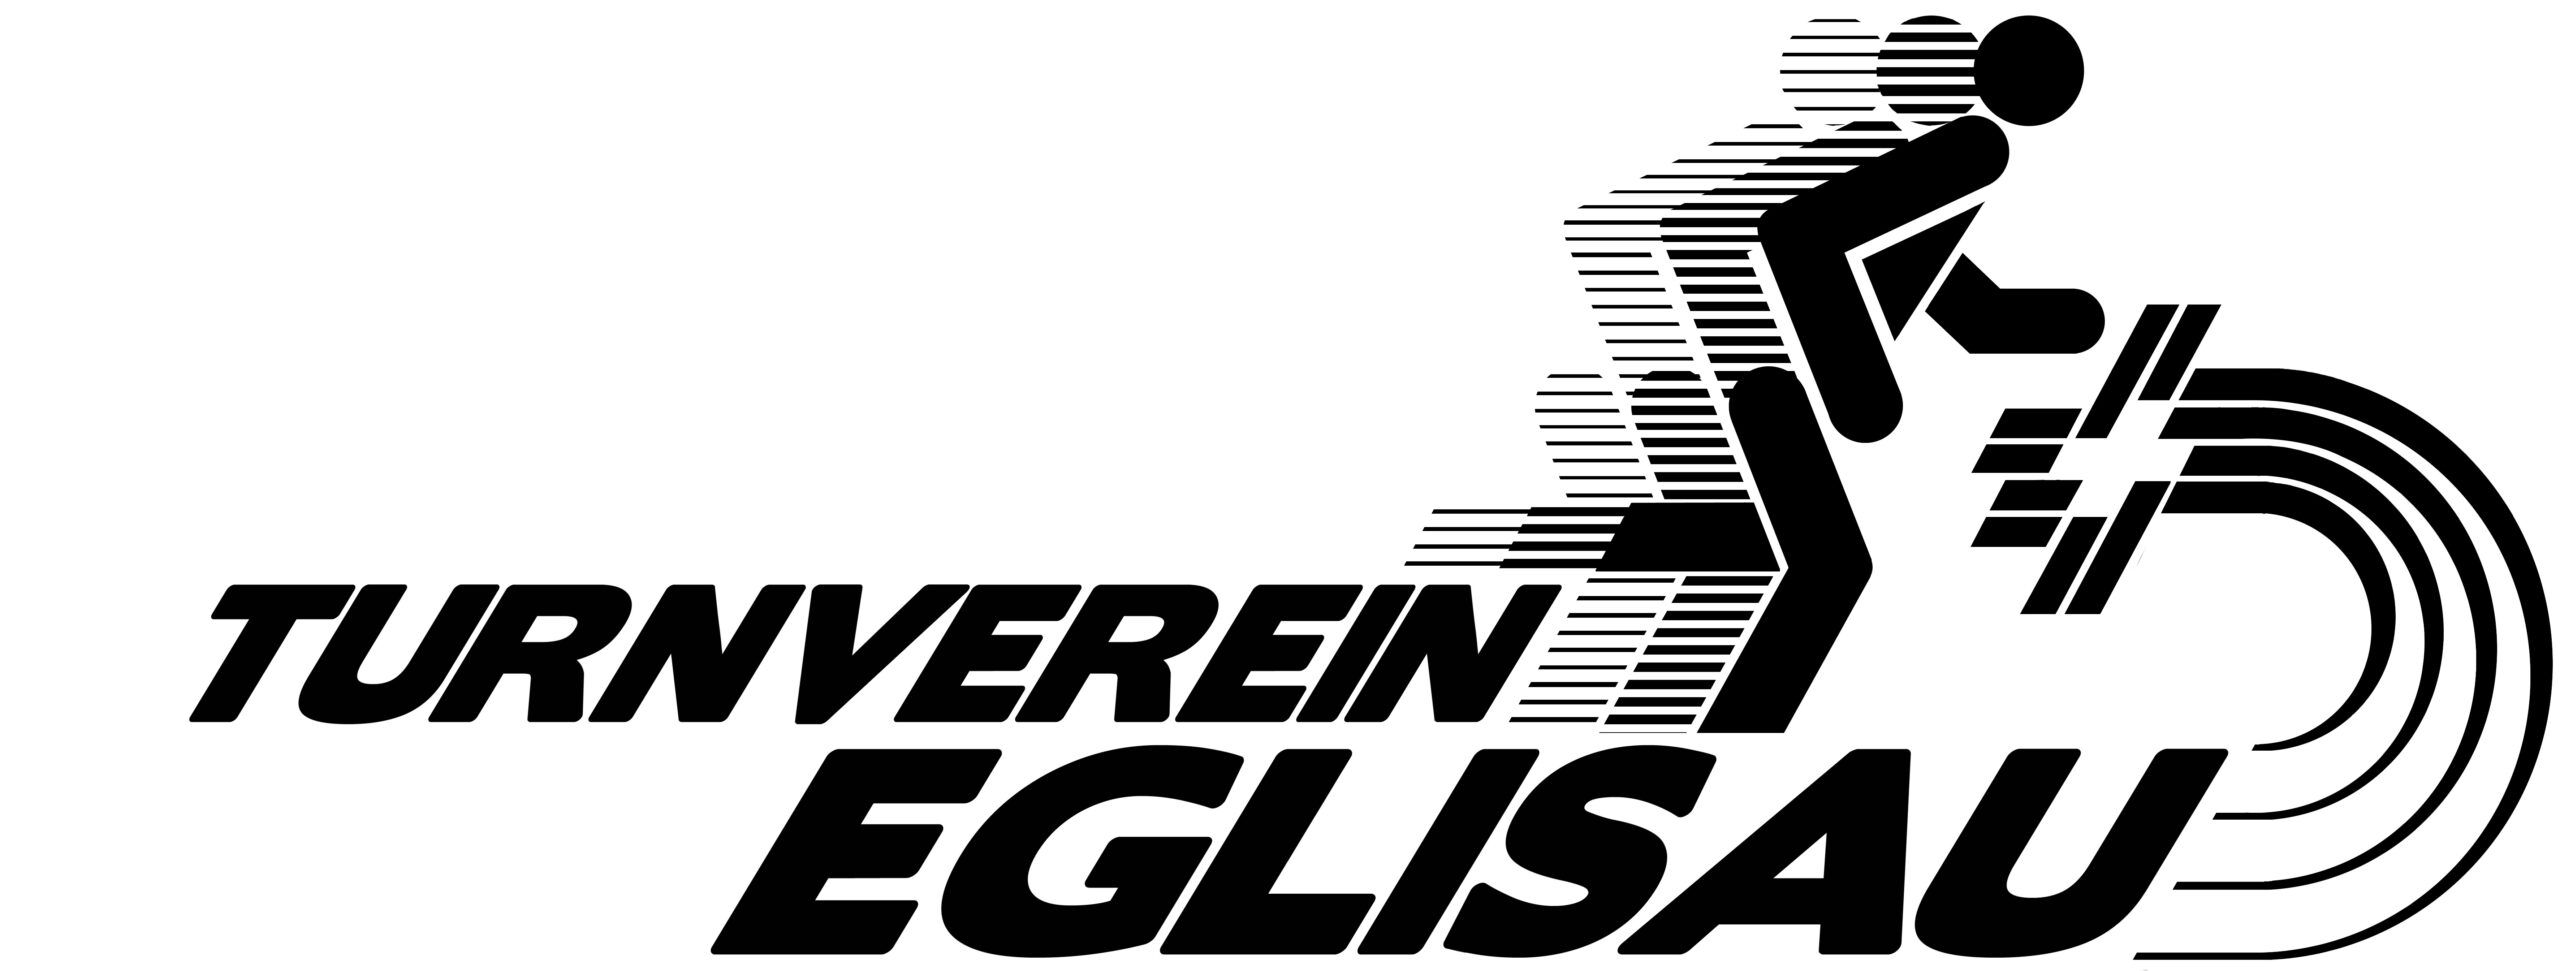 Logo Turnverein Eglisau